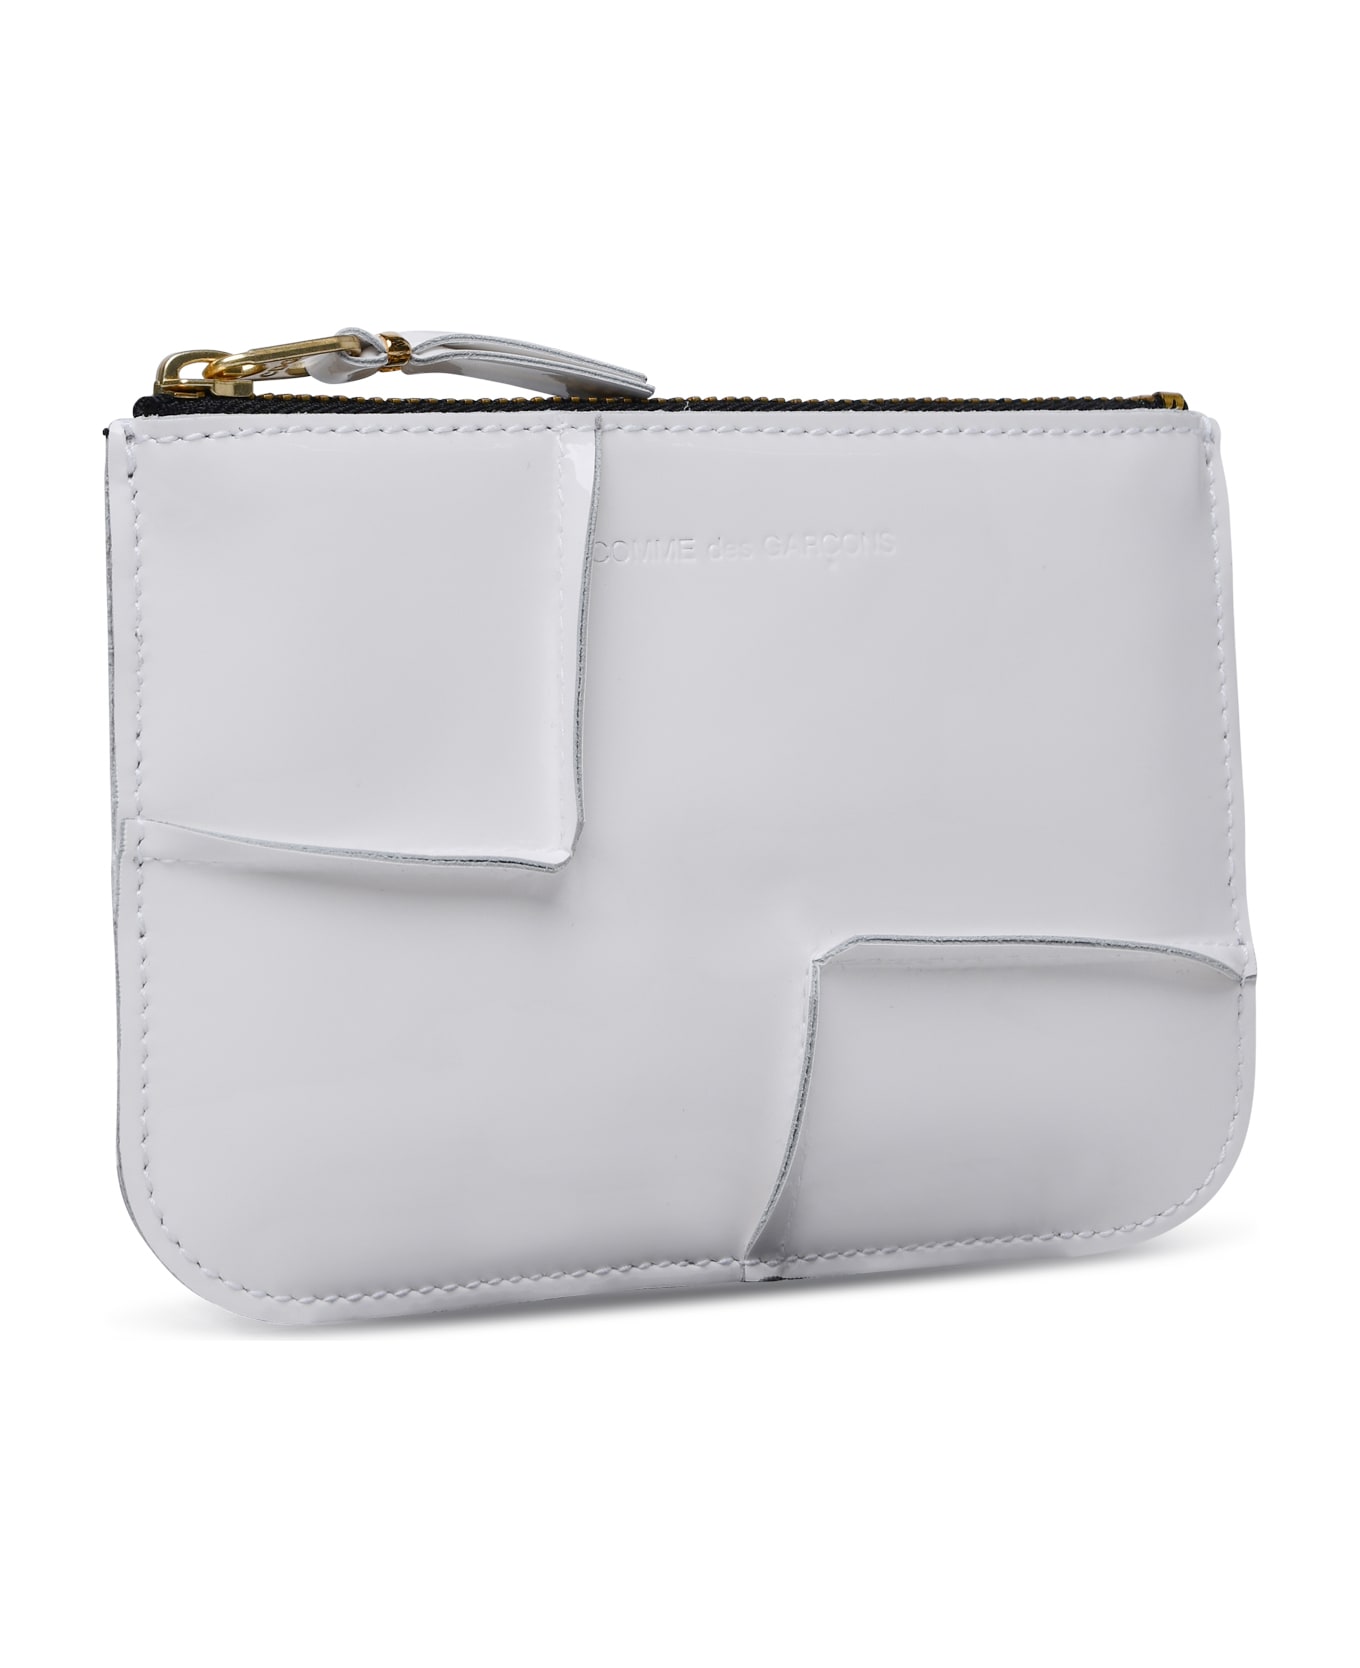 Comme des Garçons Wallet 'medley' White Leather Card Holder - White 財布